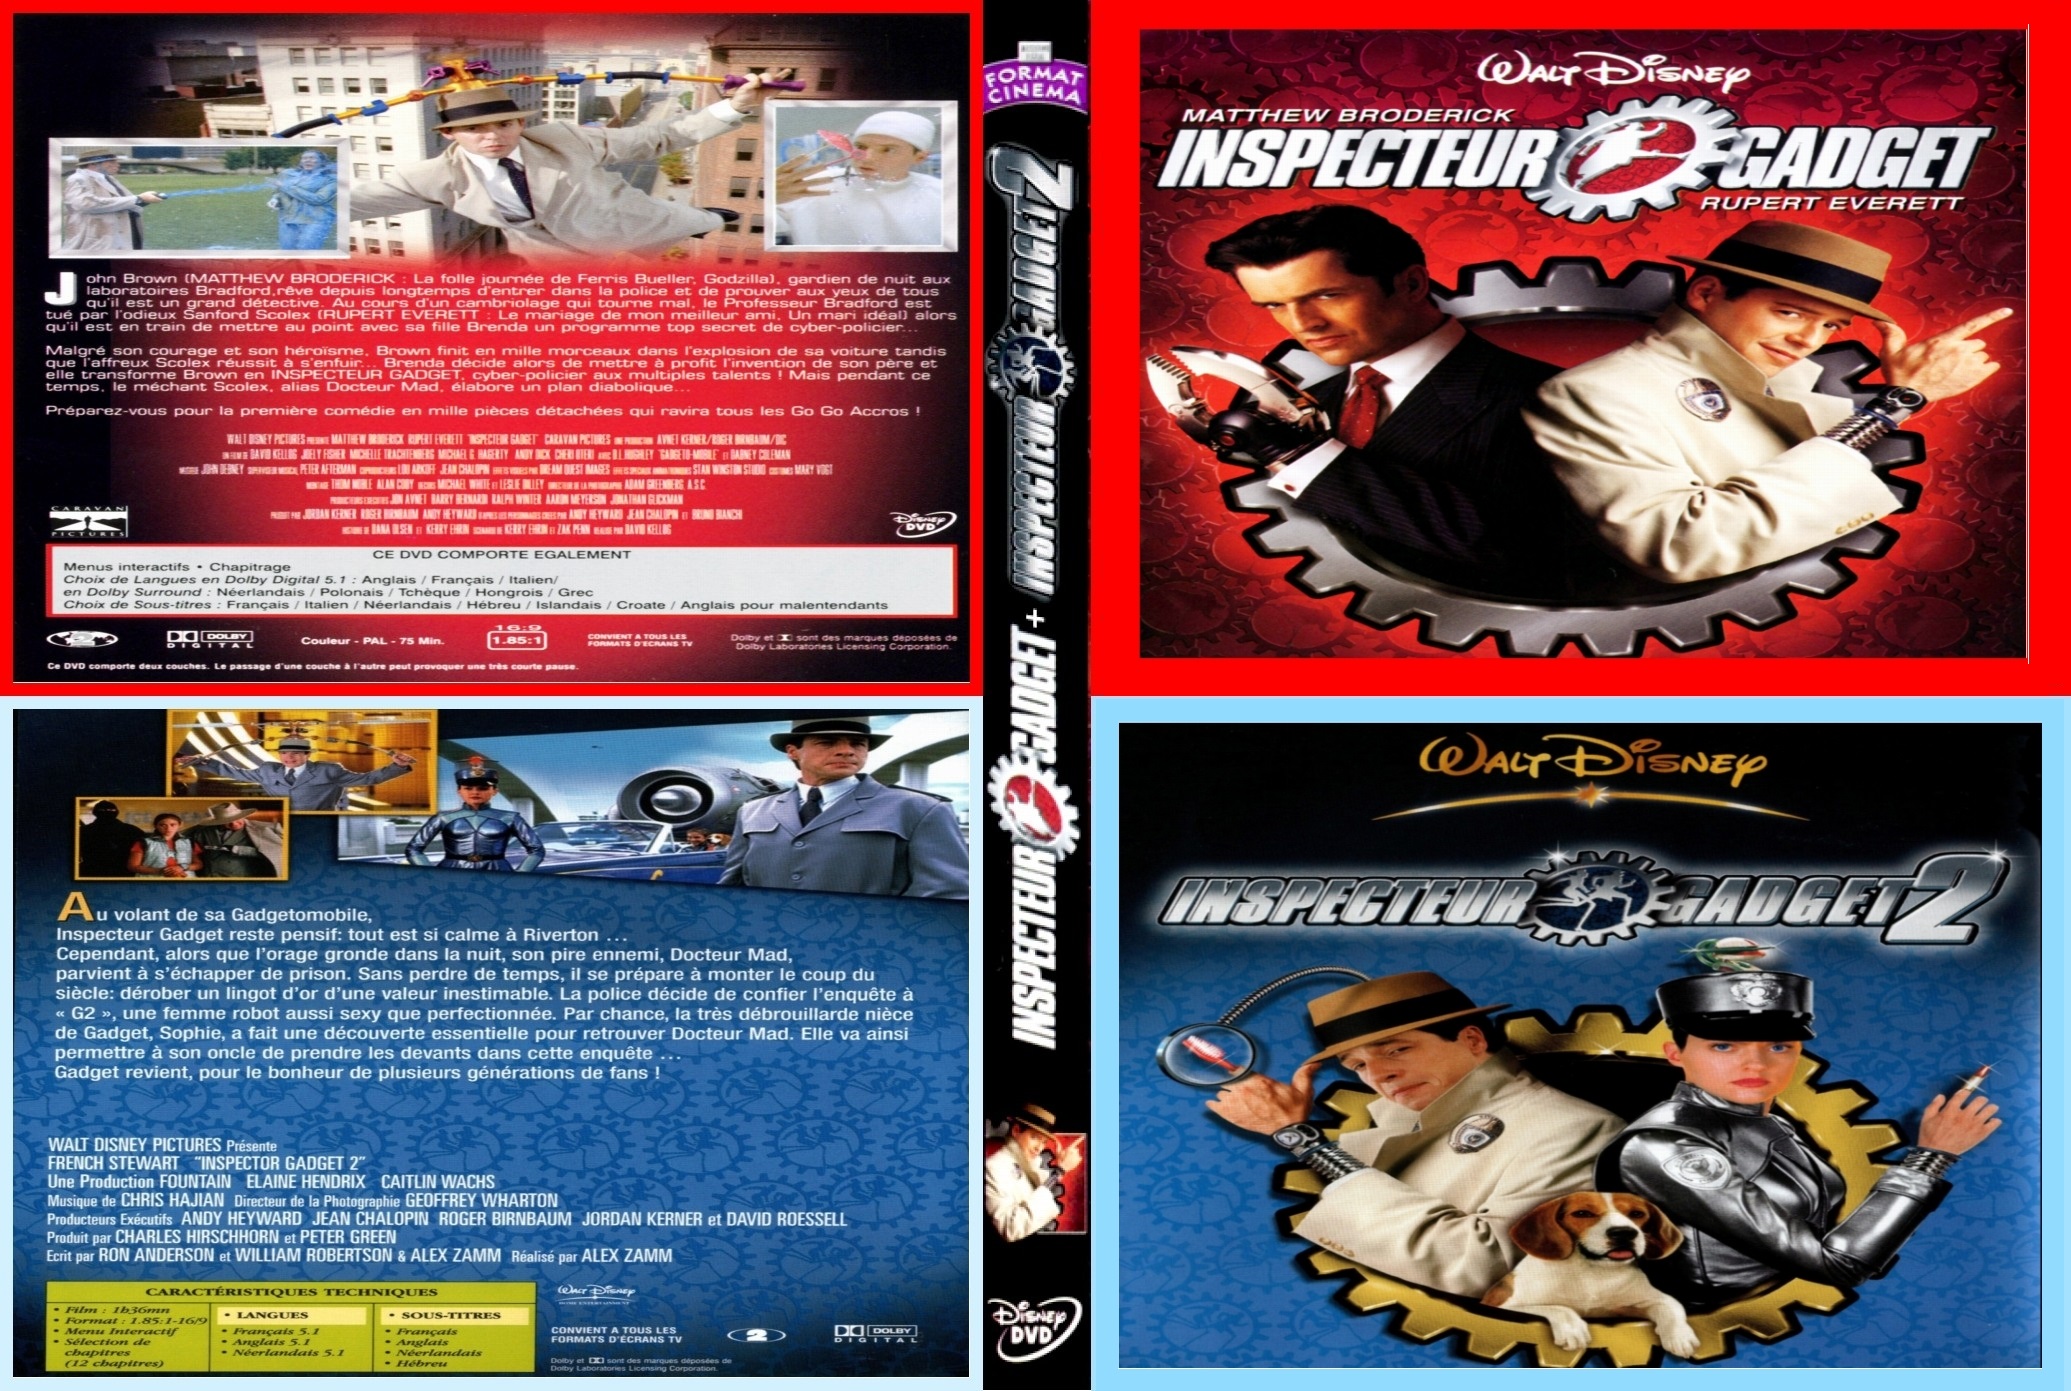 Jaquette DVD Inspecteur Gadget 1 & 2 custom